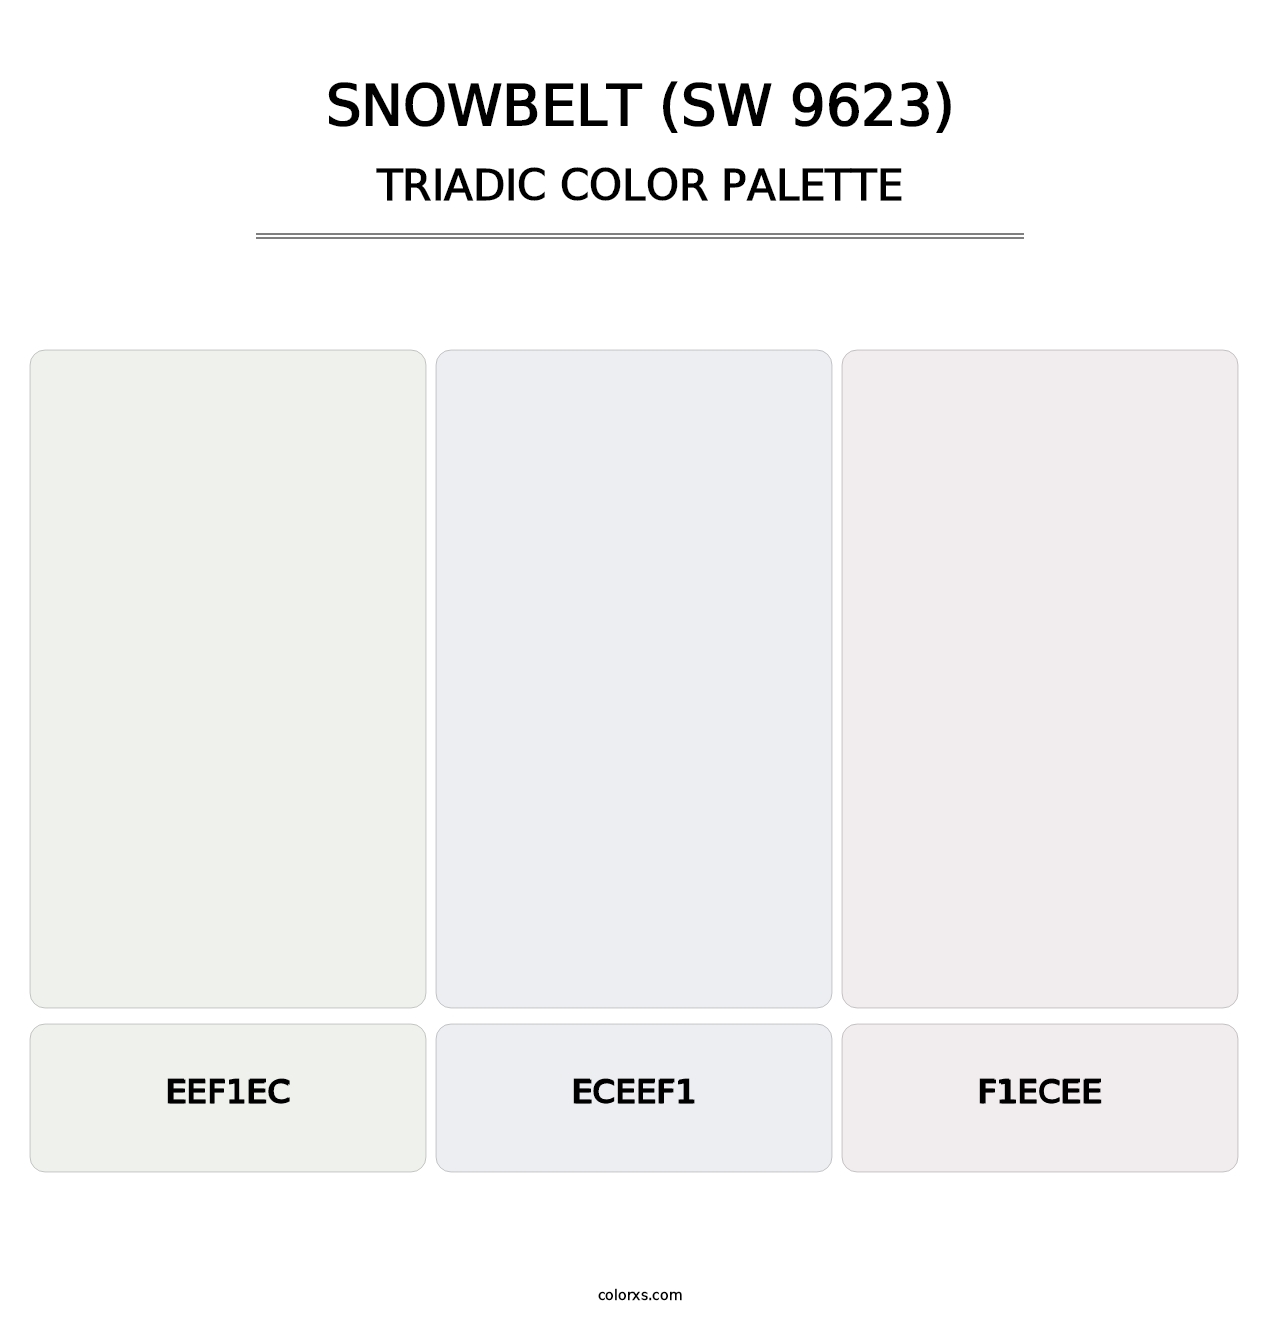 Snowbelt (SW 9623) - Triadic Color Palette